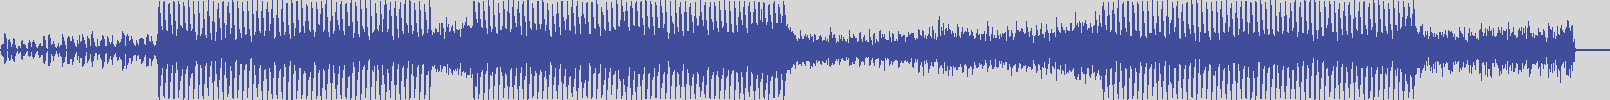 nf_boyz_records [NFY089] Ron Longa - Saying Goodbye [Deep Dis Mix] audio wave form